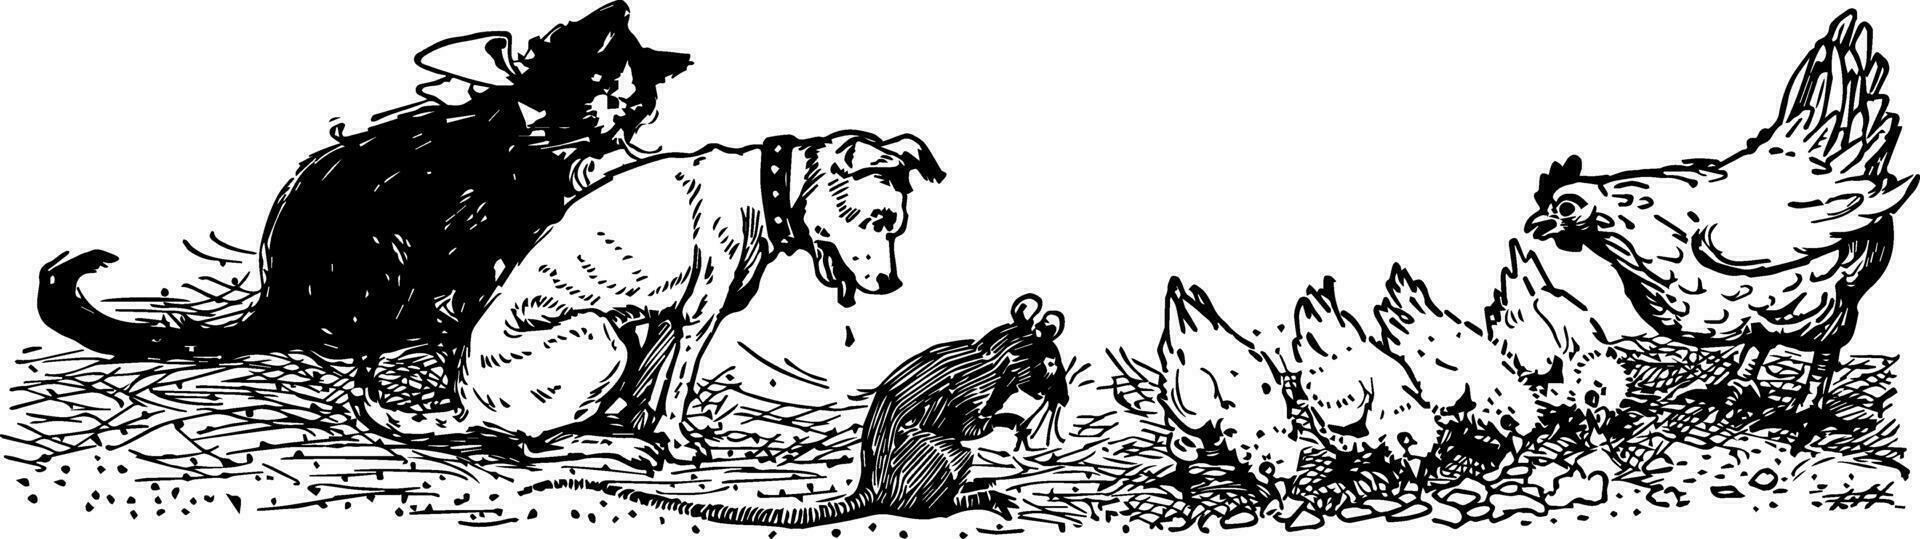 Animals, The Little Red Hen, vintage illustration vector